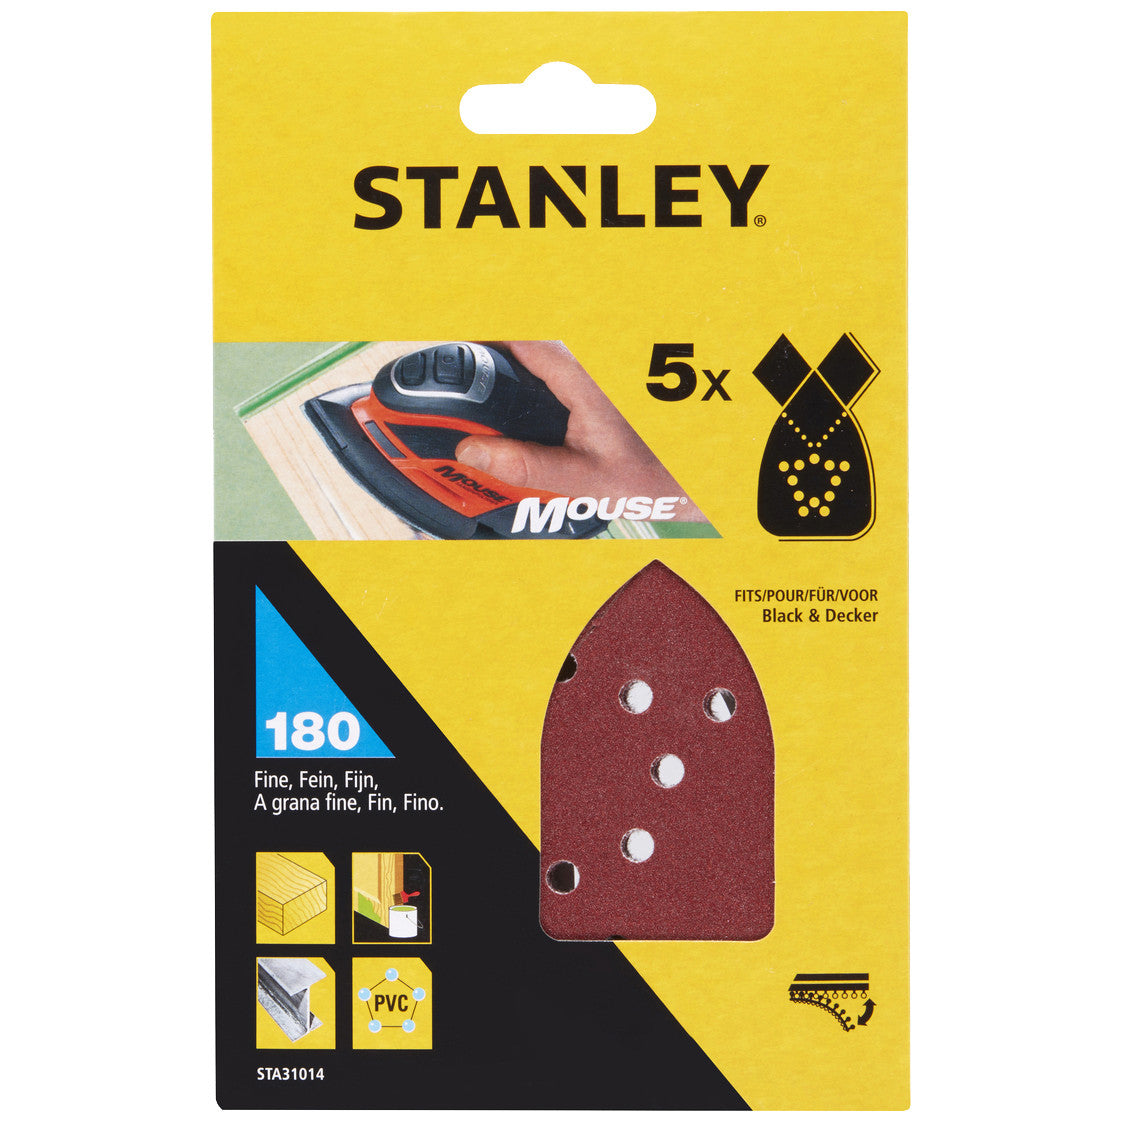 Piranha/stanley sta31014 (x31014) 5 fogli velcro x mouse gr.180